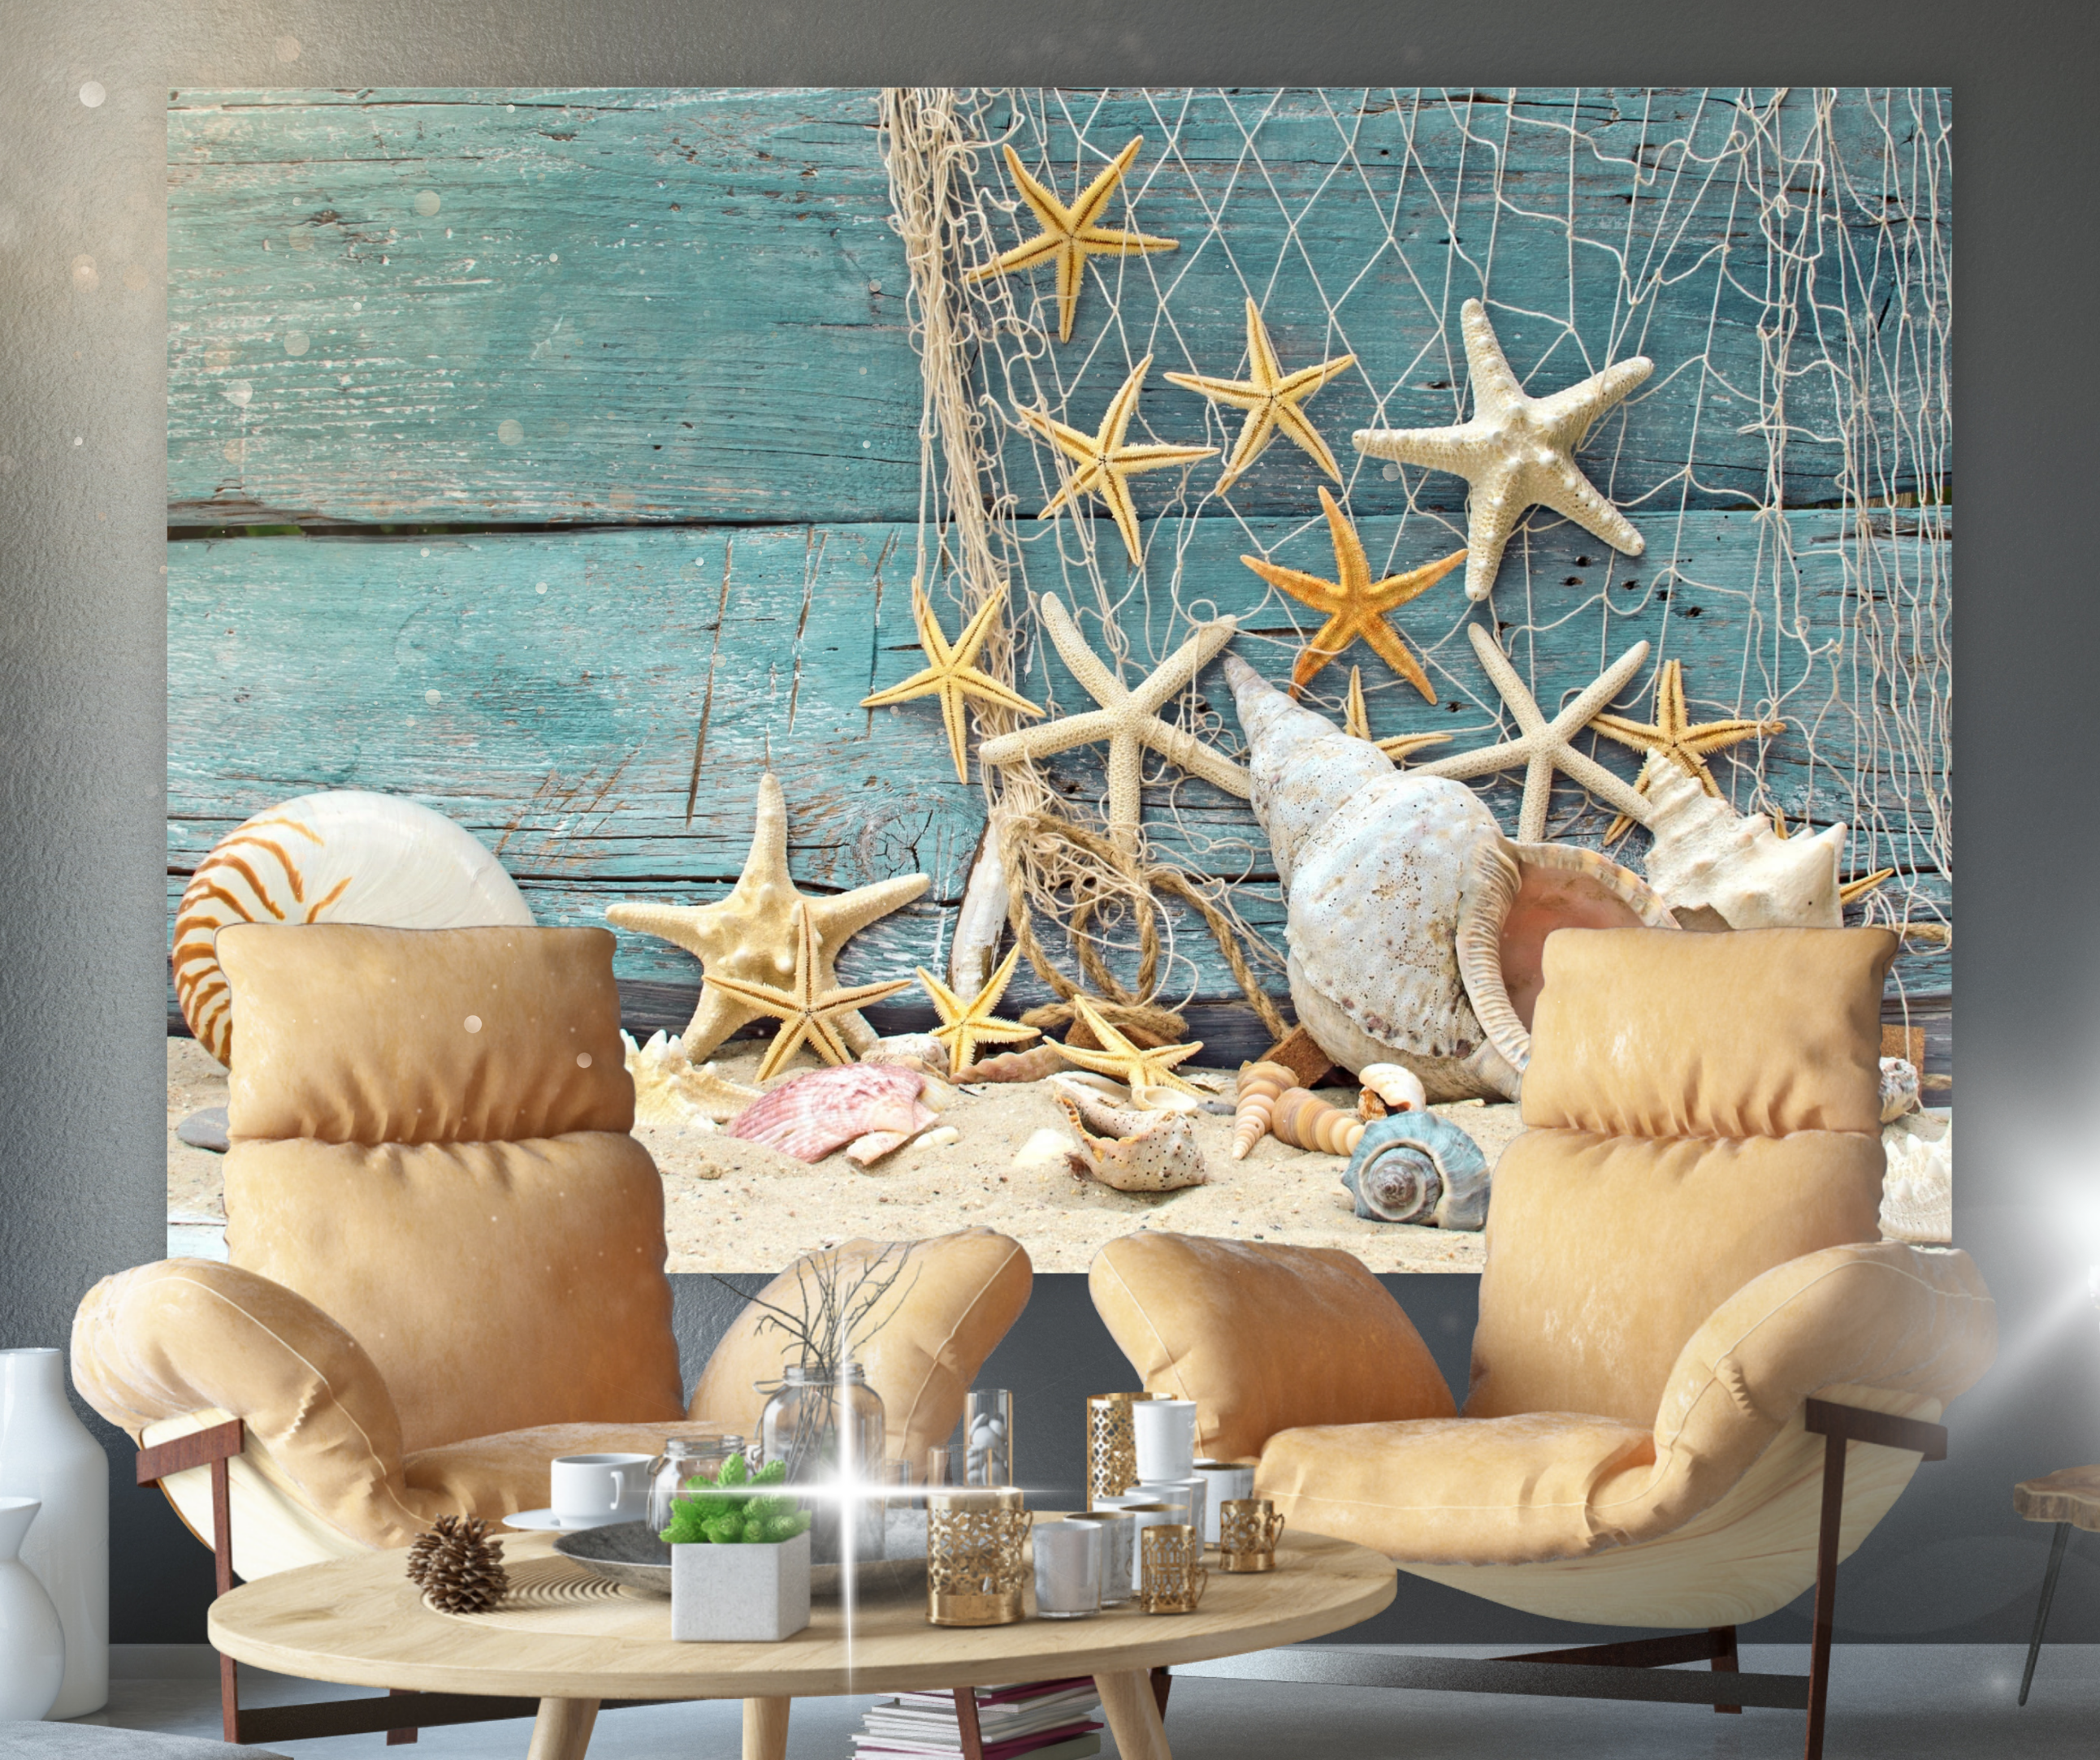 KaiSha Tapestry Wall Hanging; Beach Home Wall Decor Ocean Sea Blue Art Bedroom Shells Starfish Backdrop